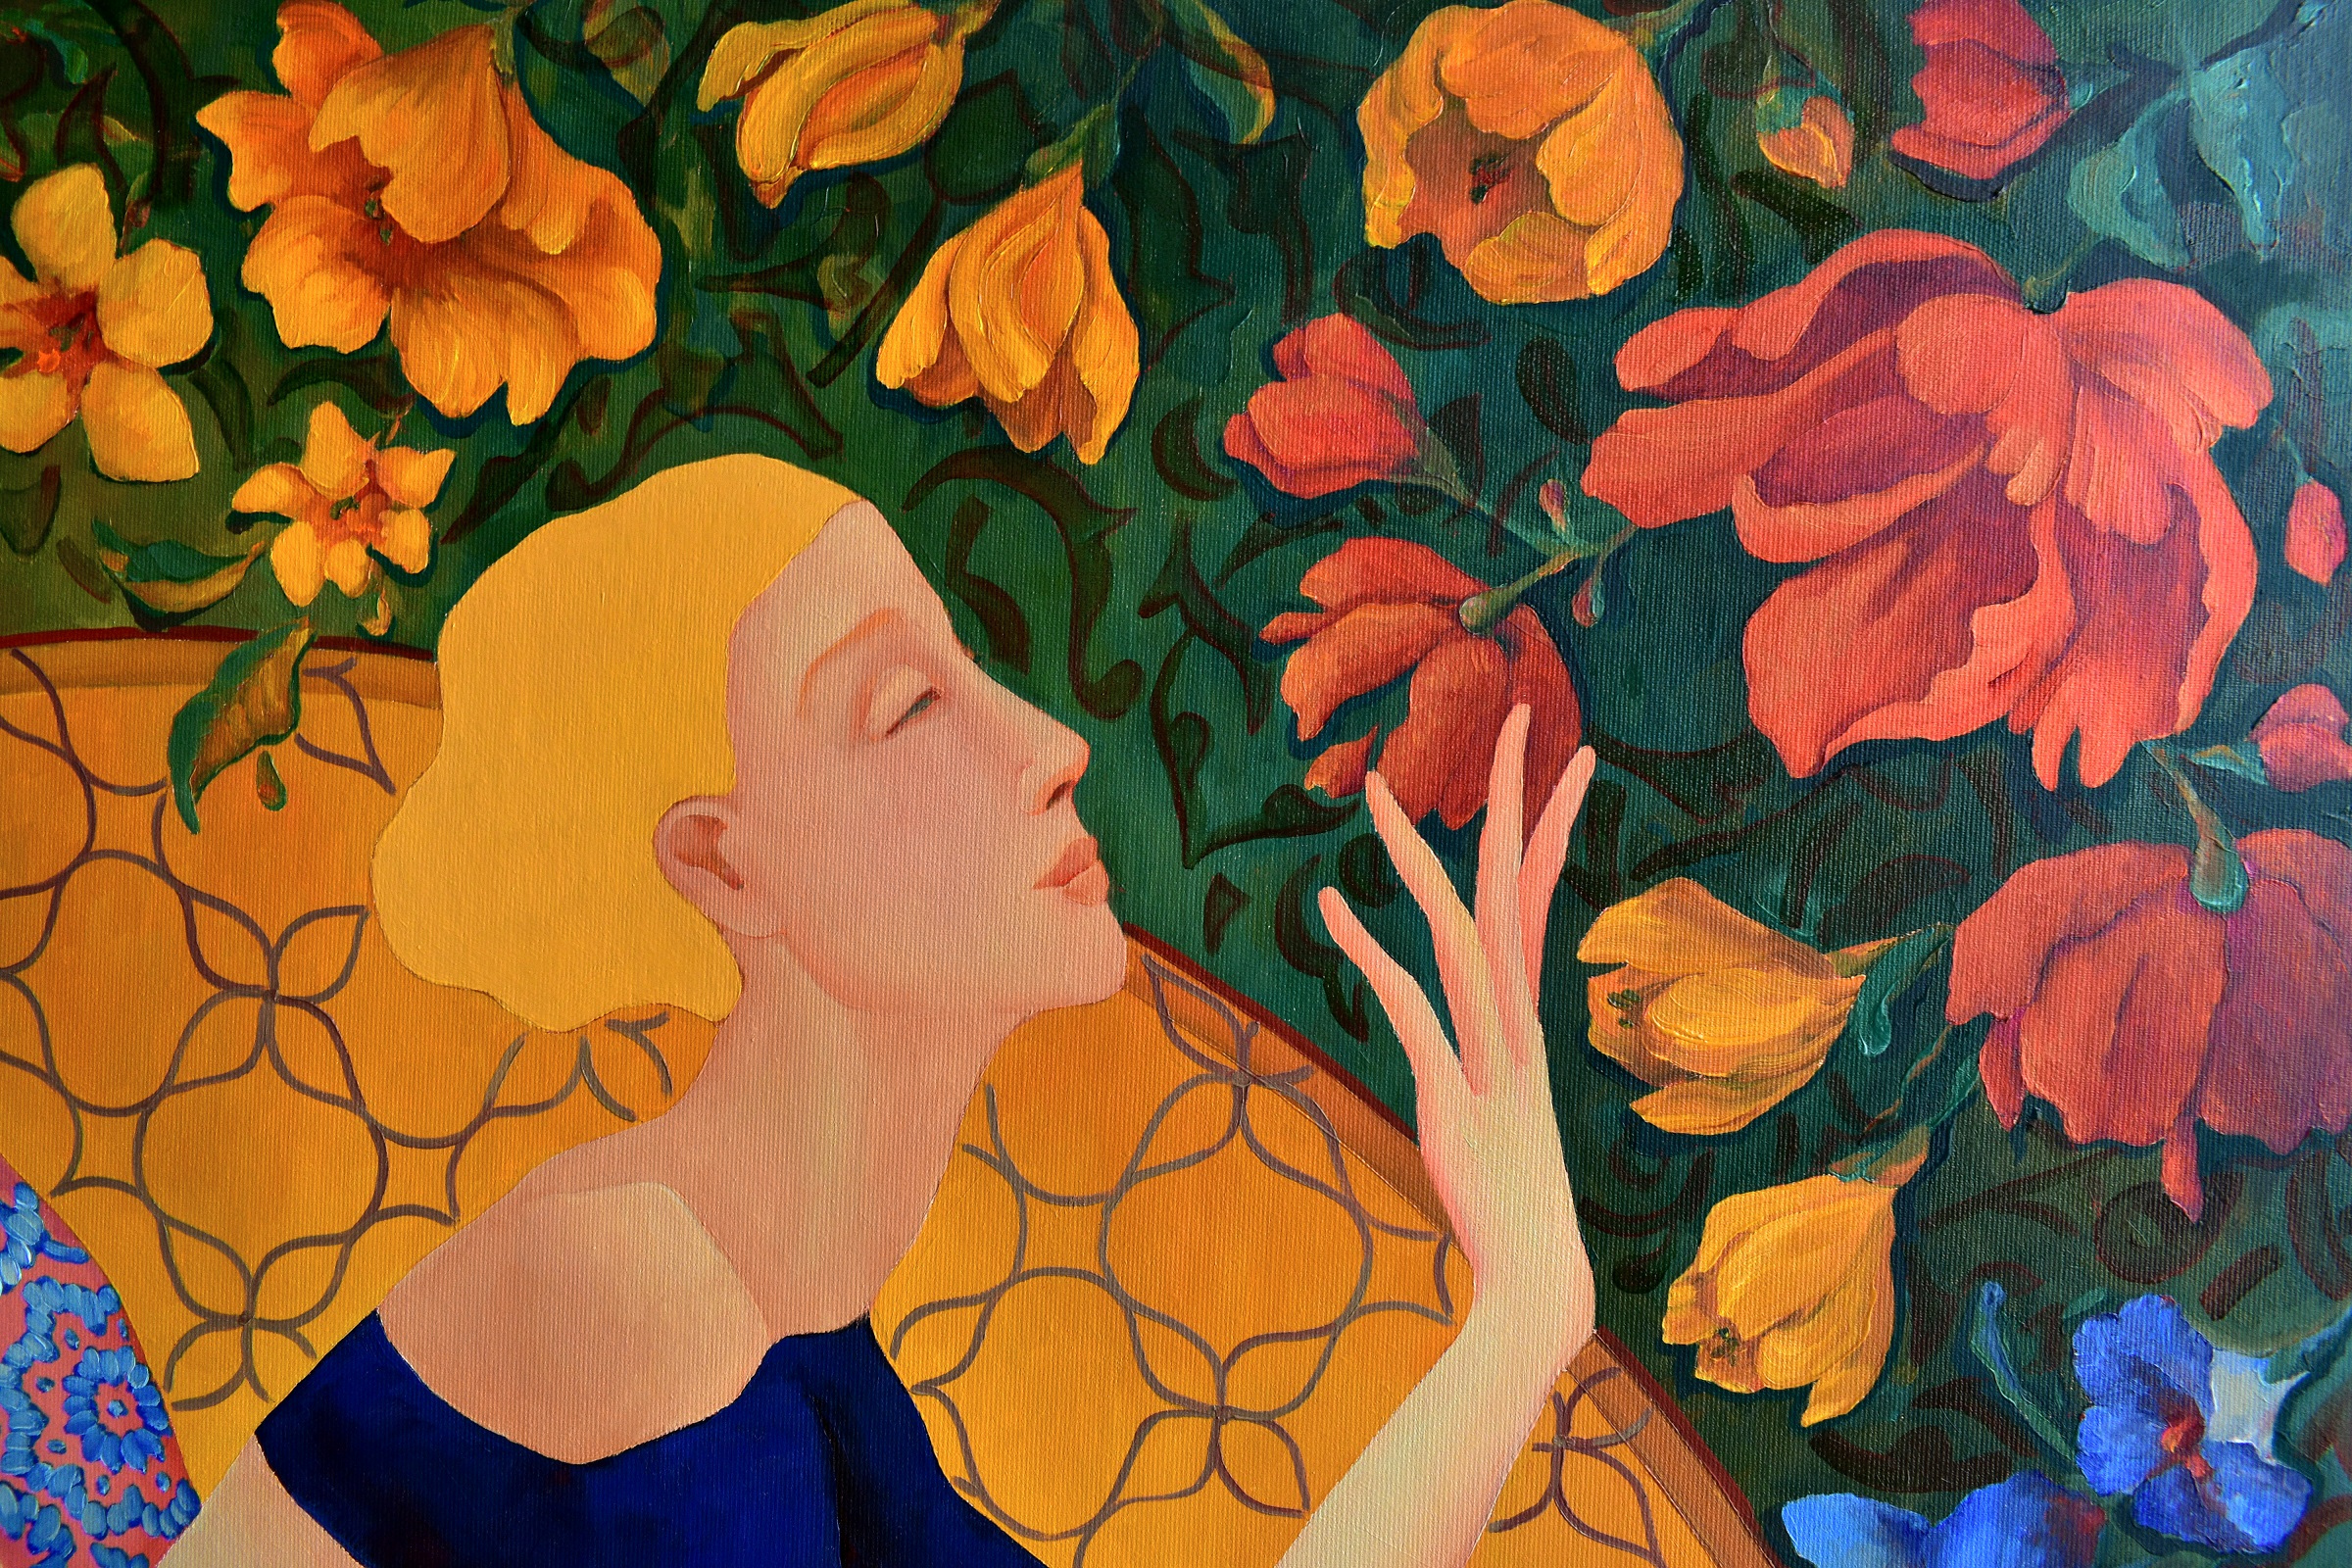 Painting by Marina Venediktova Mystical garden detail